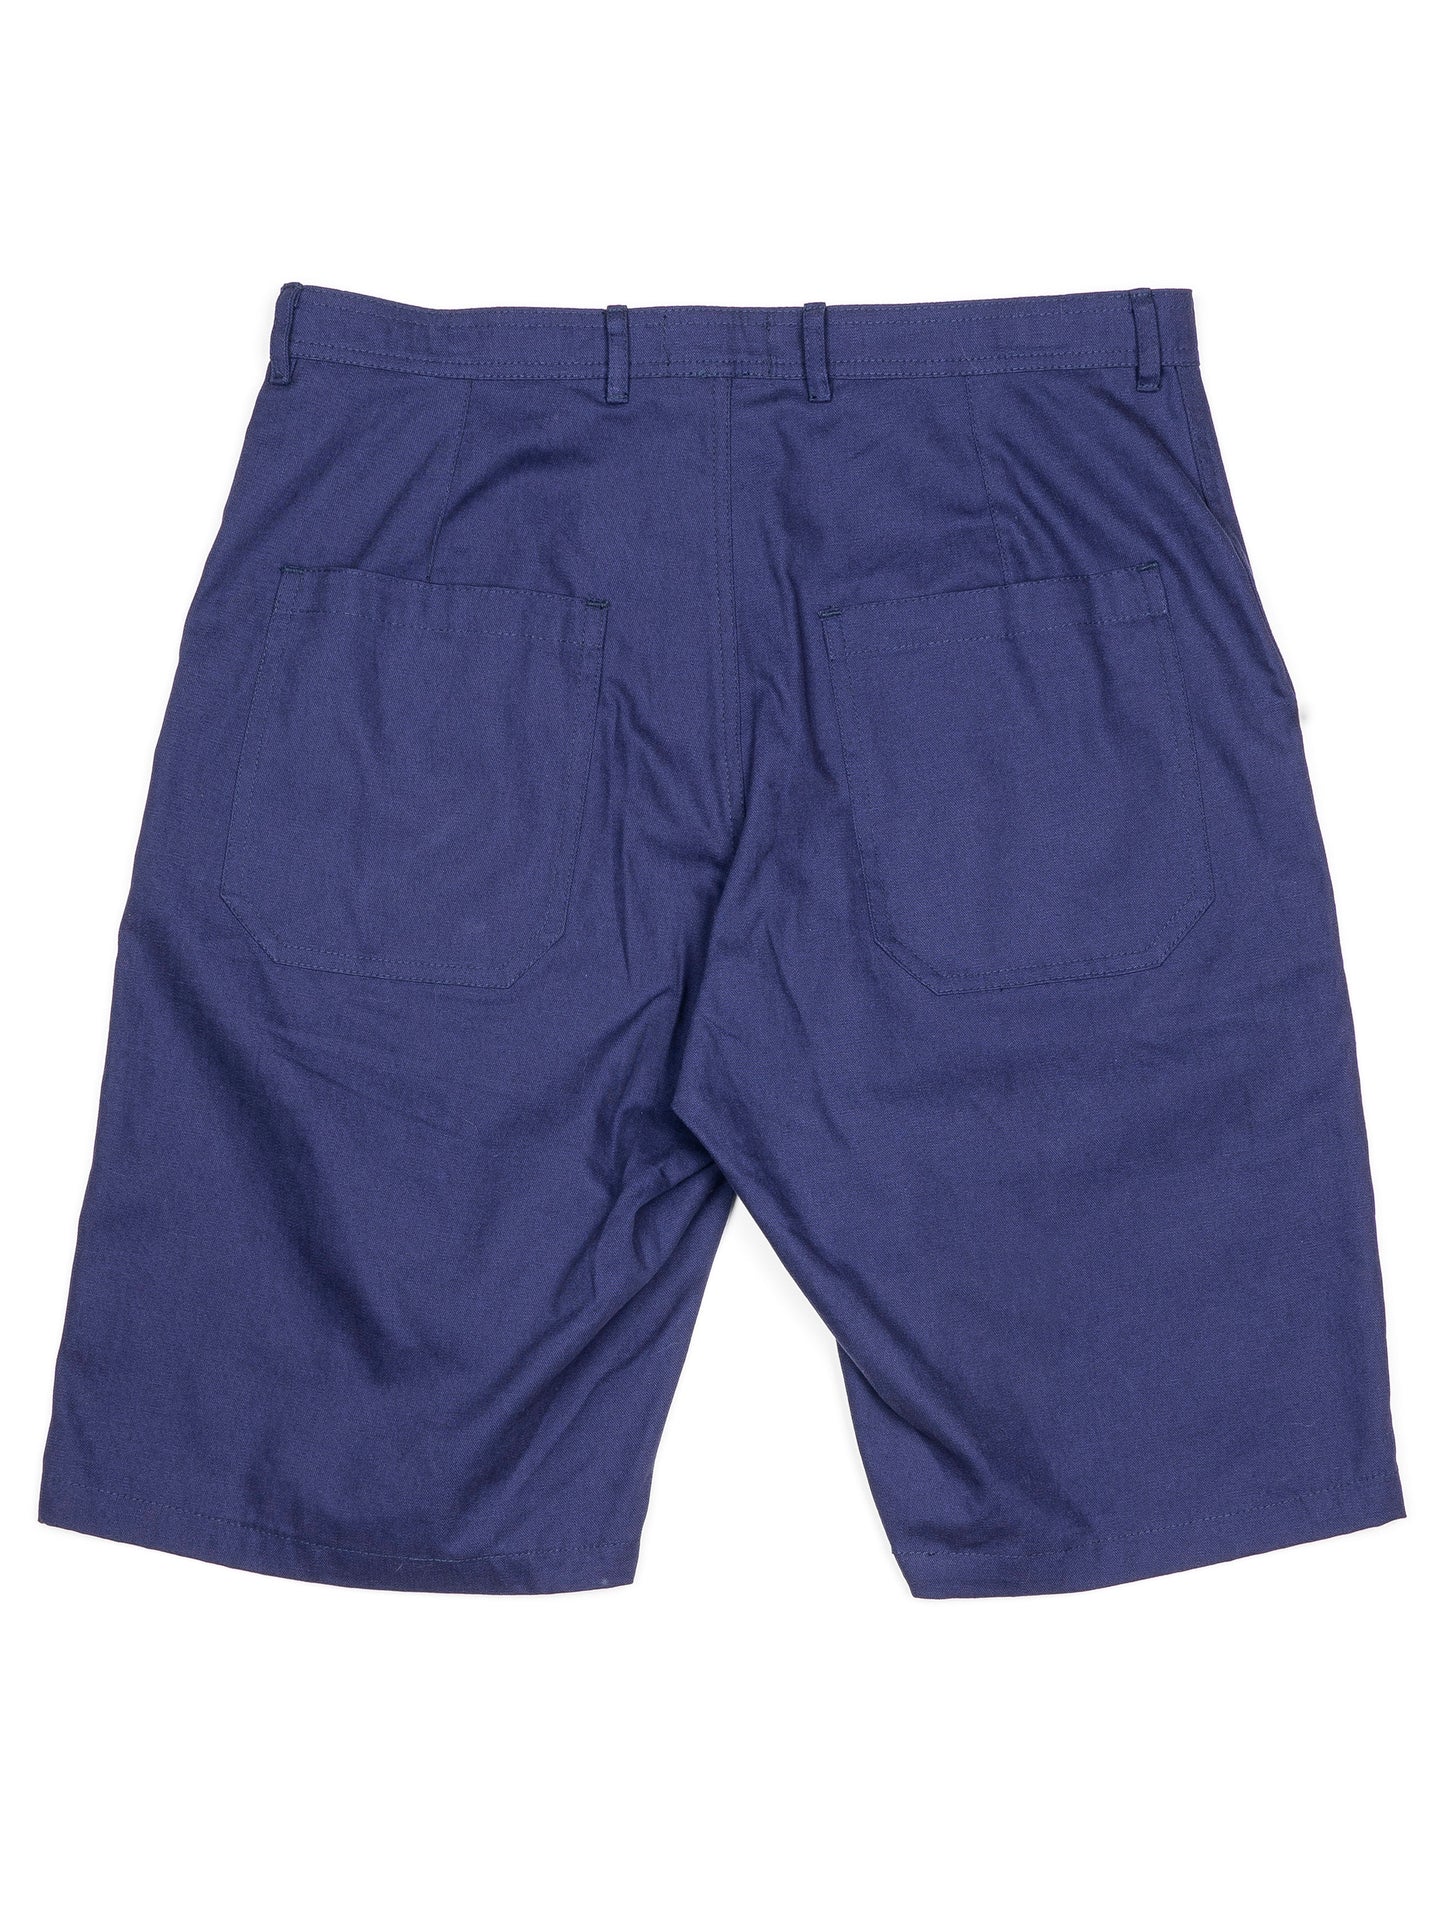 Shoreline Shorts